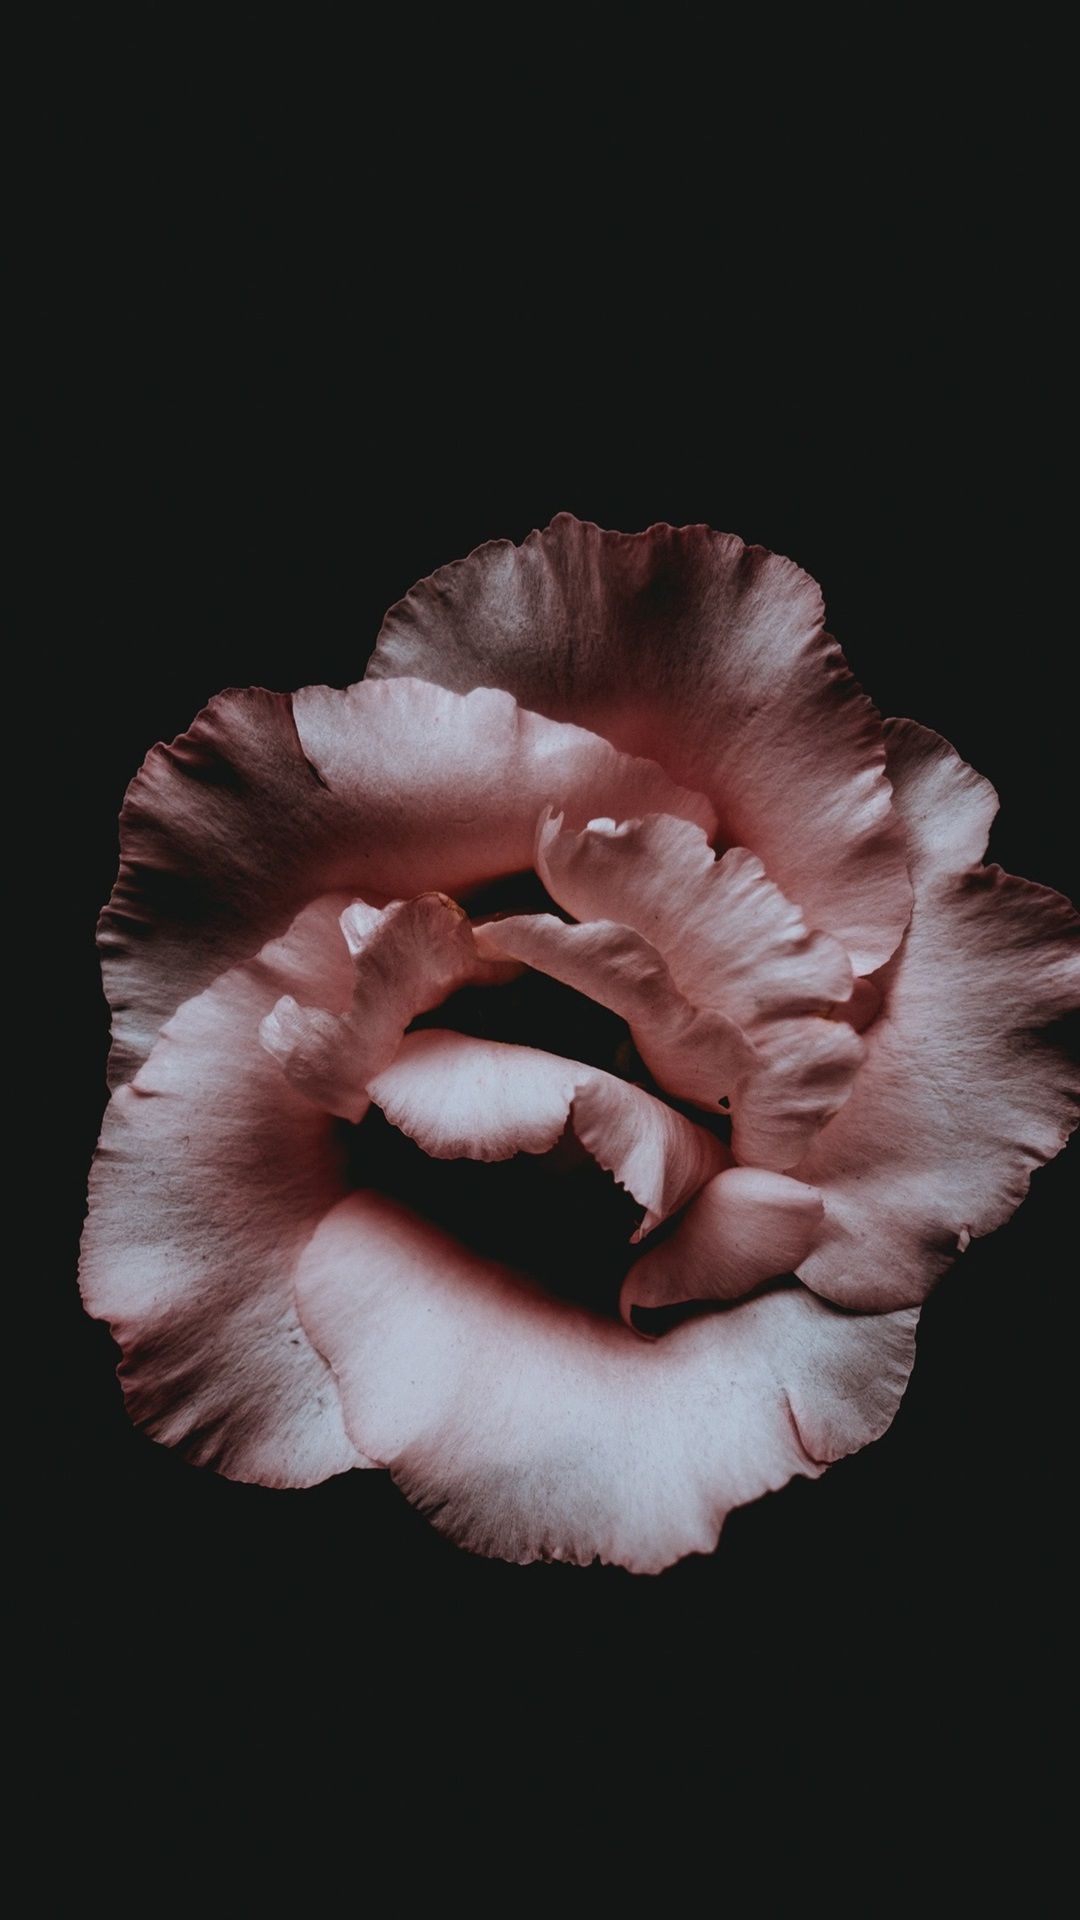  Dunkles Hintergrundbild 1080x1920. Rosa Blume, Blumenblätter, dunkler Hintergrund 3840x2160 UHD 4K Hintergrundbilder, HD, Bild